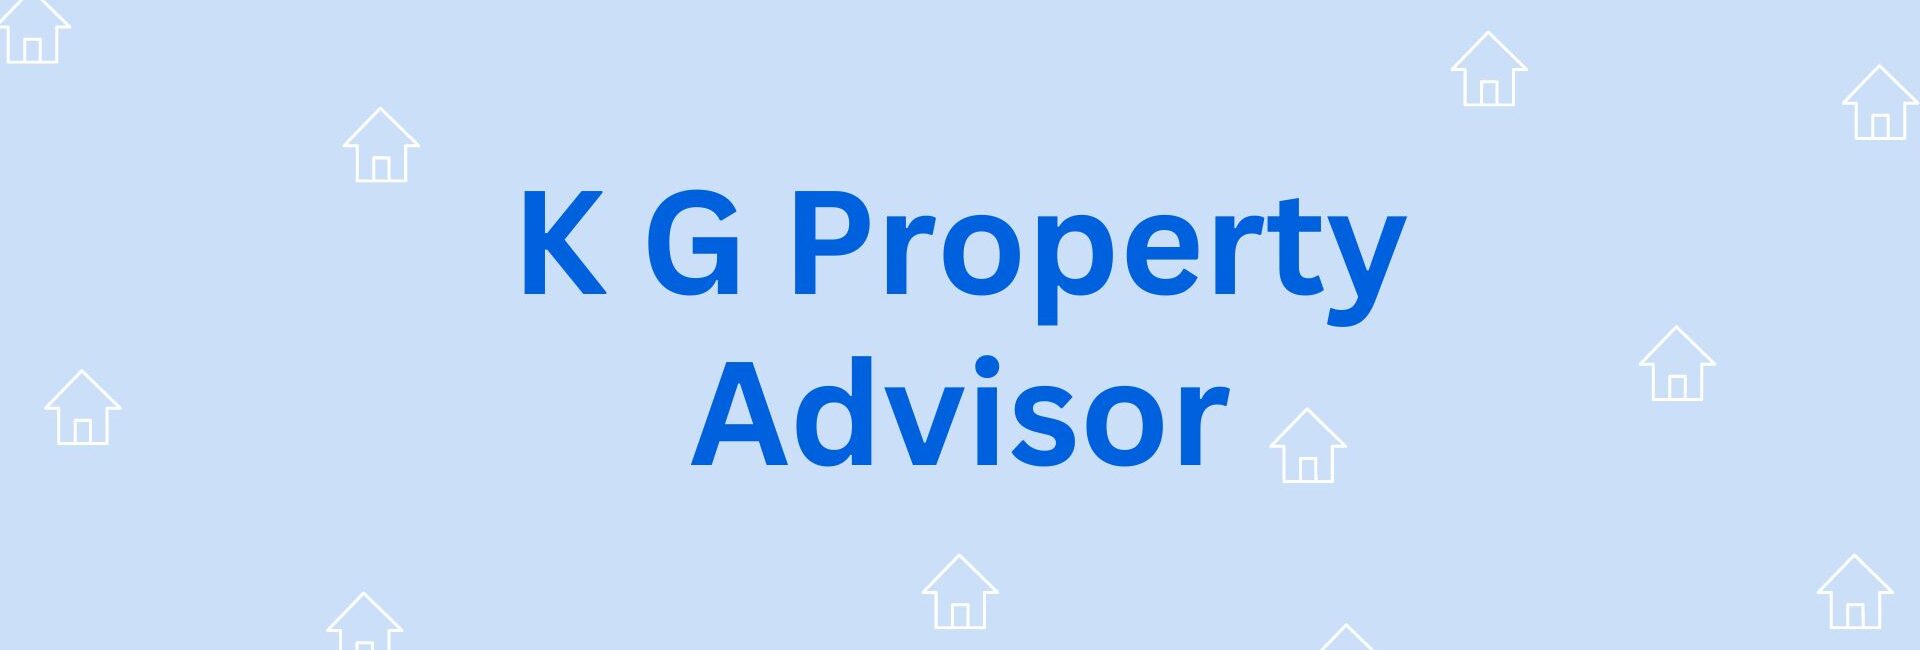 K G Property Advisor